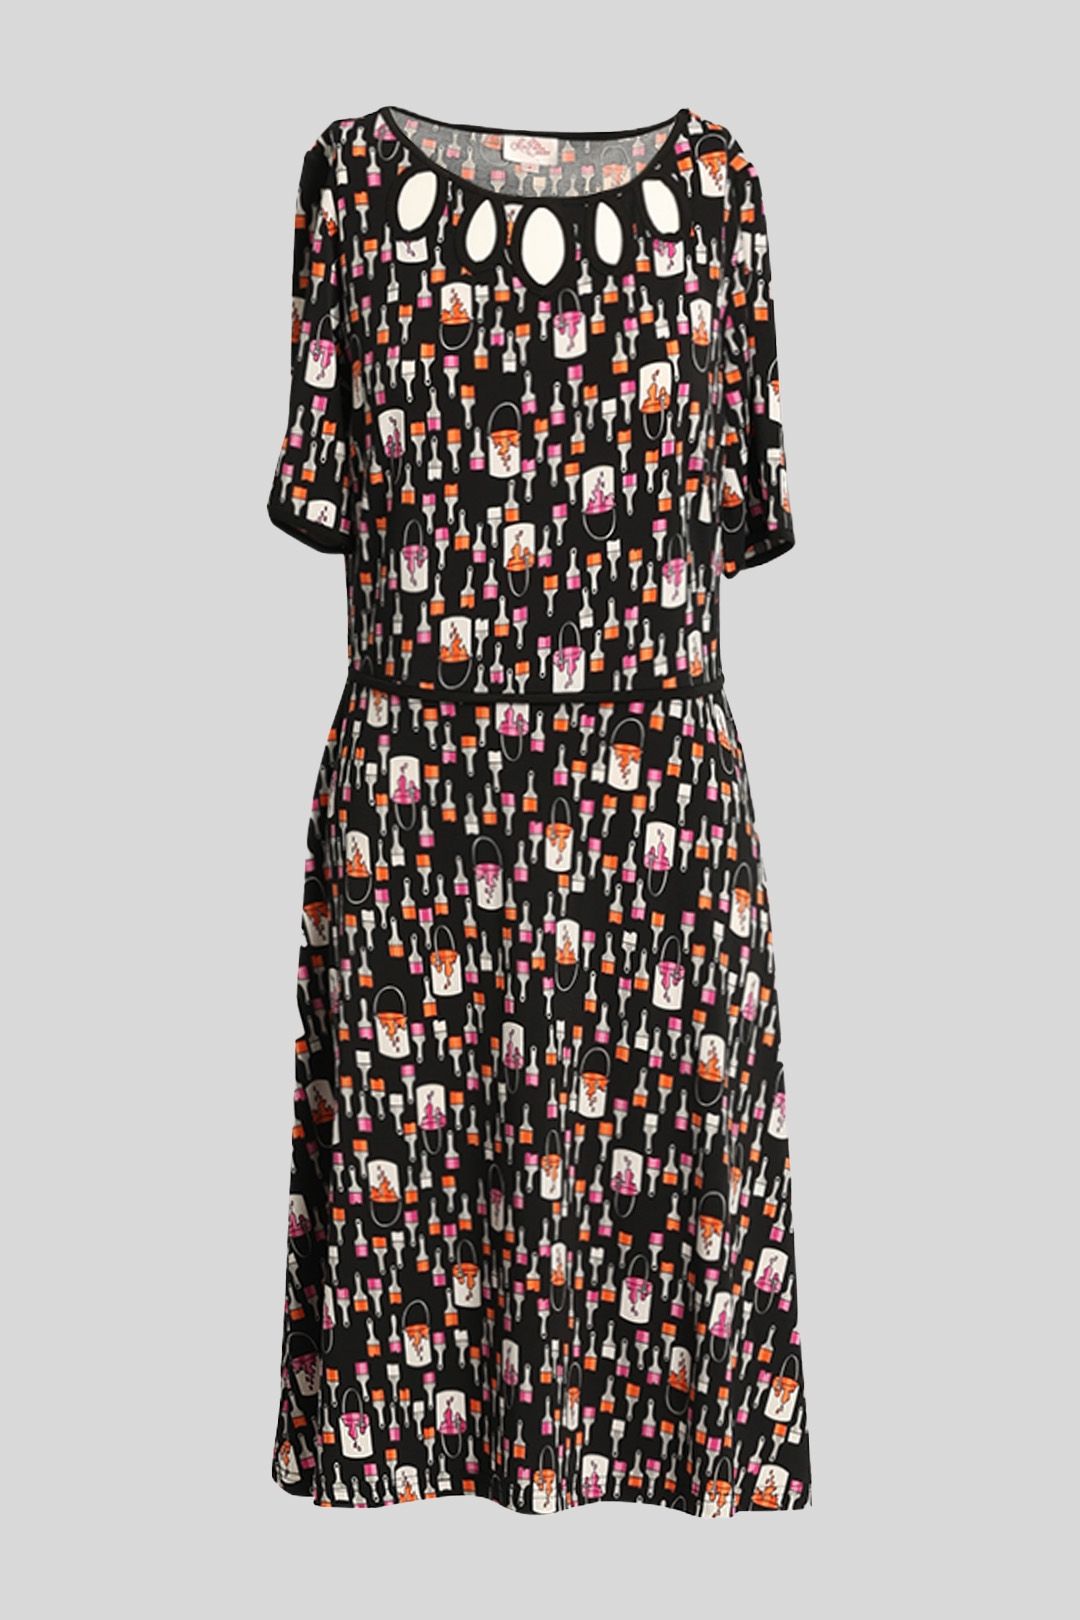 Leona Edmiston - Keyhole Black Paint Dress